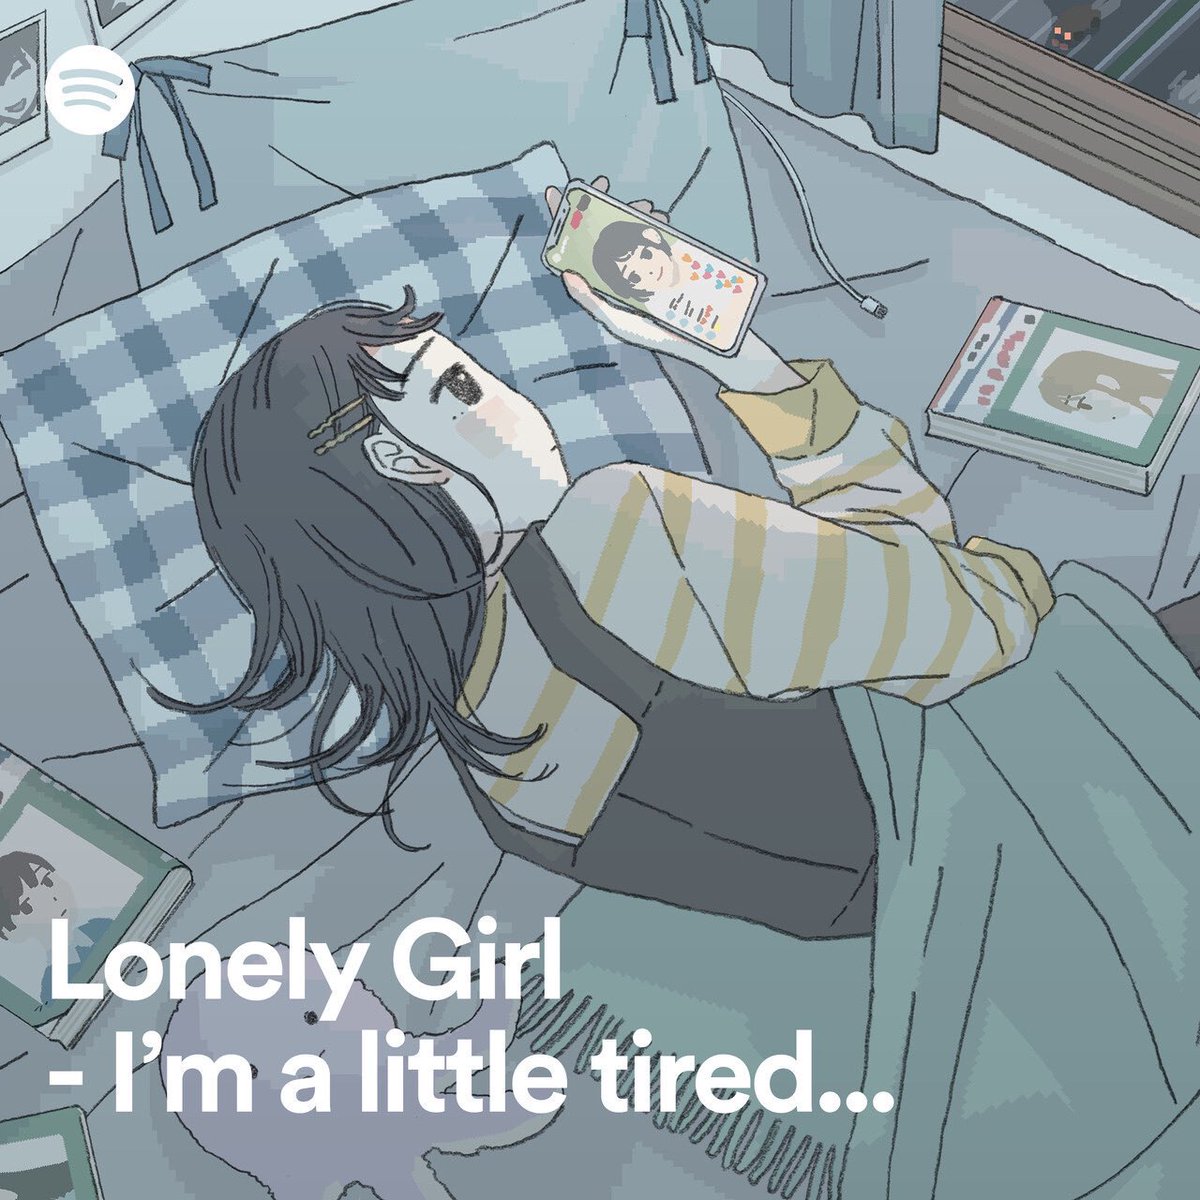 Fall asleep with my playlist😪💤

open.spotify.com/playlist/37i9d…

 #LonelyGirl